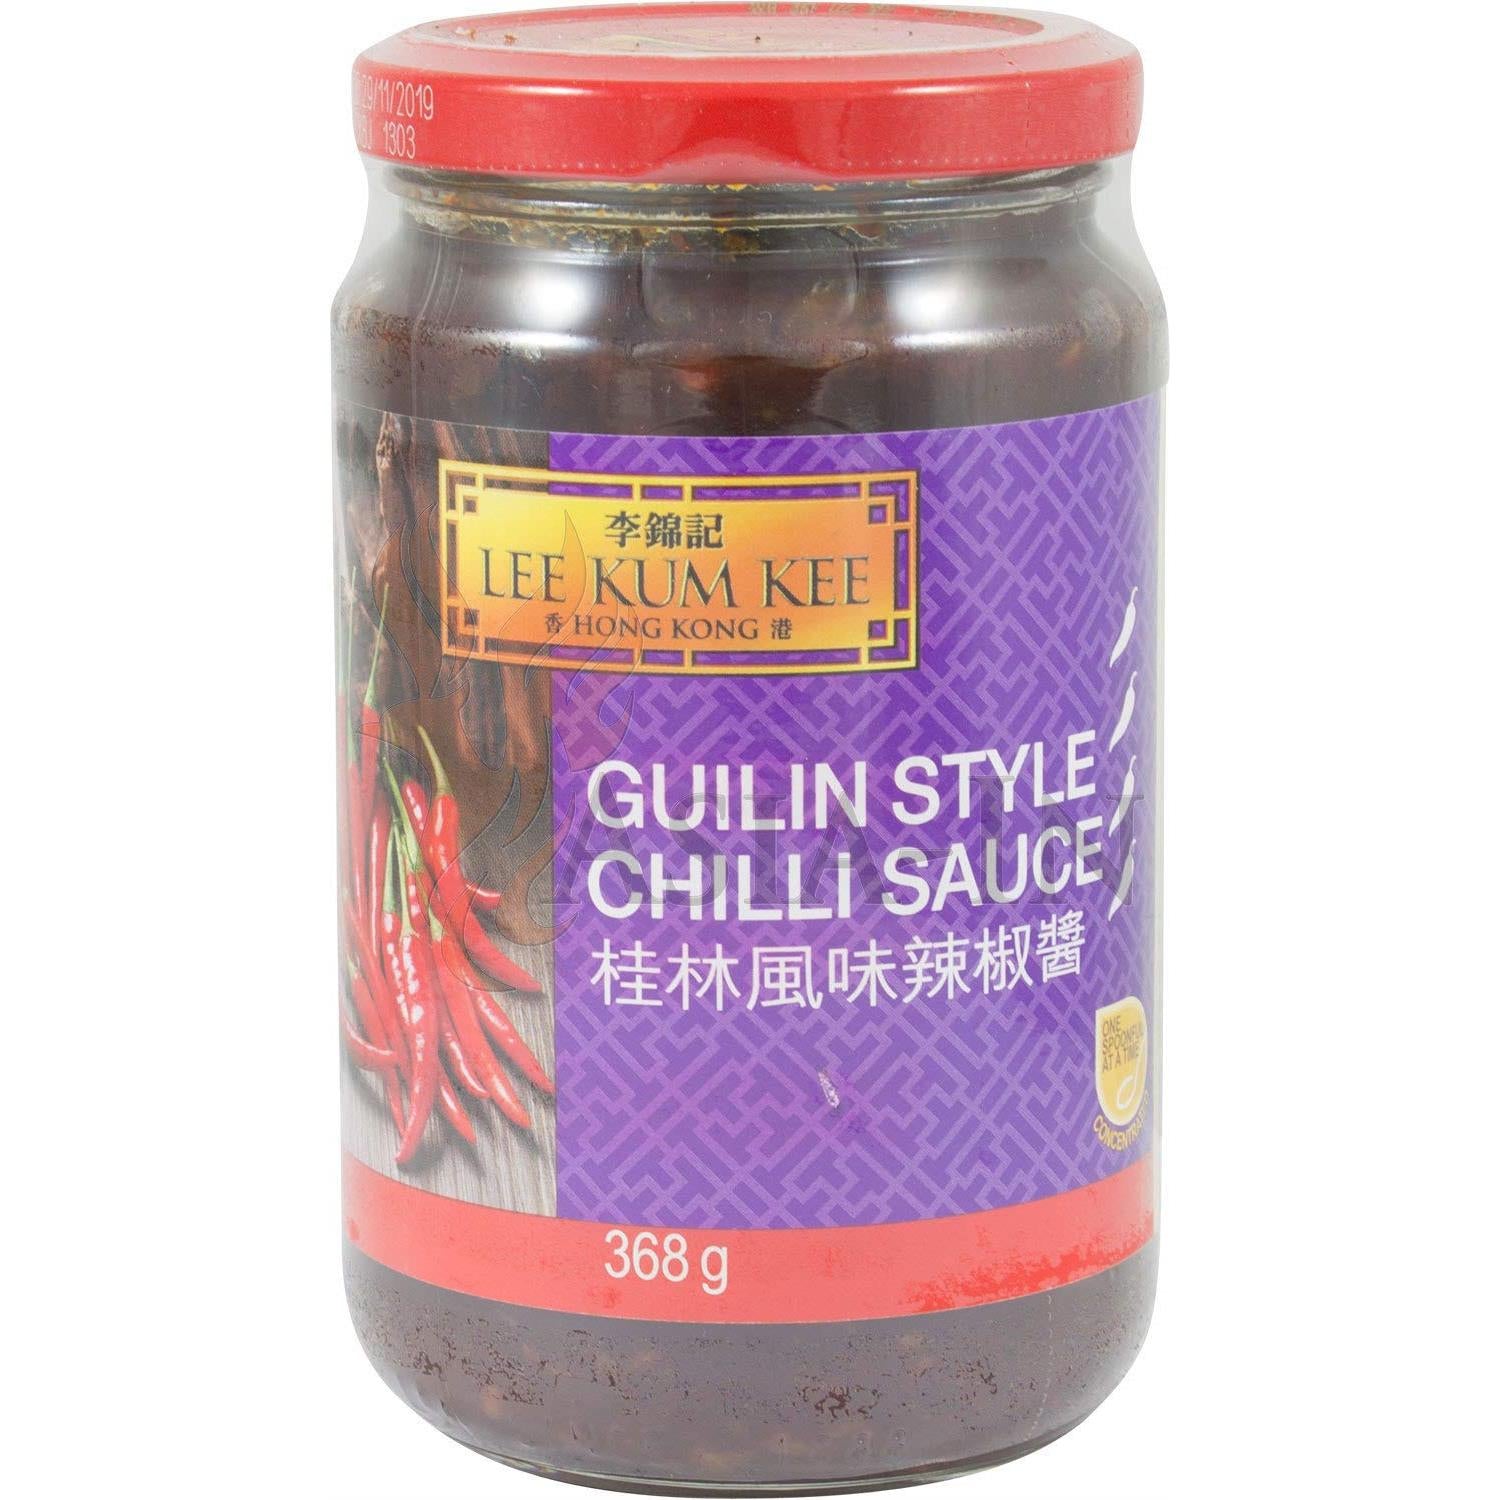 Lee Kum Kee Guilin Chili Sauce 13 Oz.